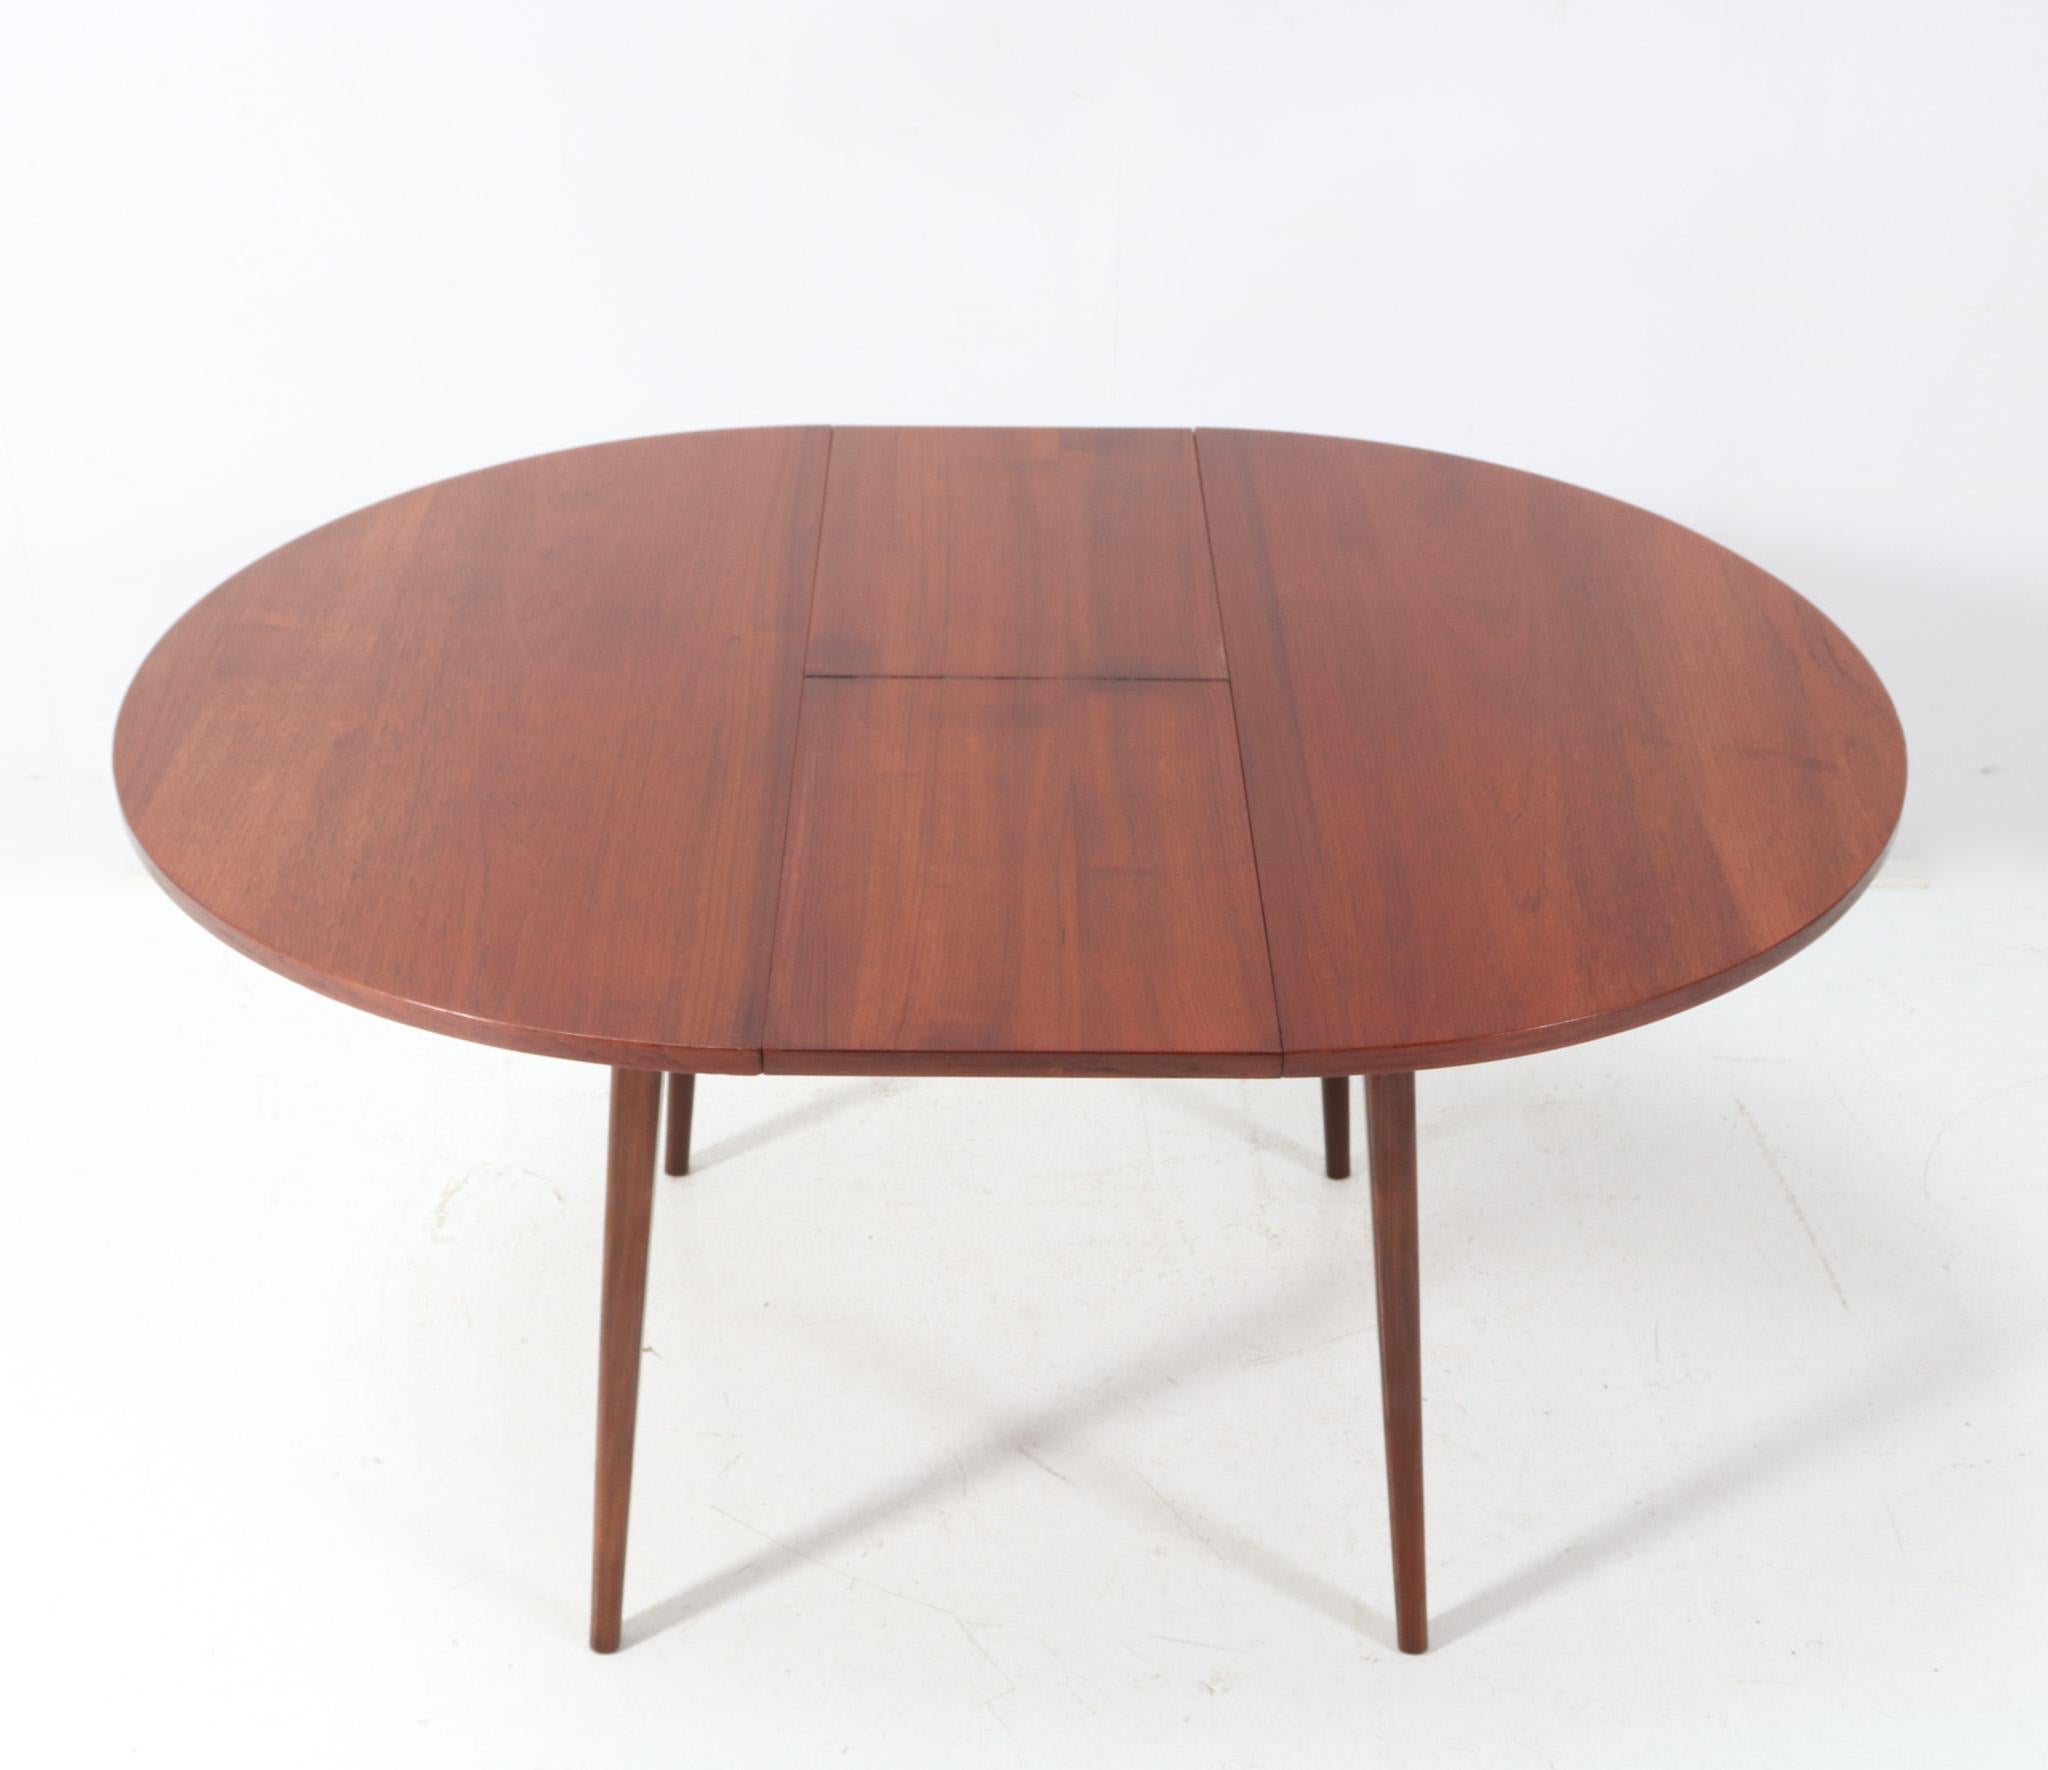 Teak Mid-Century Modern Extendable Dining Table by Louis van Teeffelen, 1950s For Sale 3